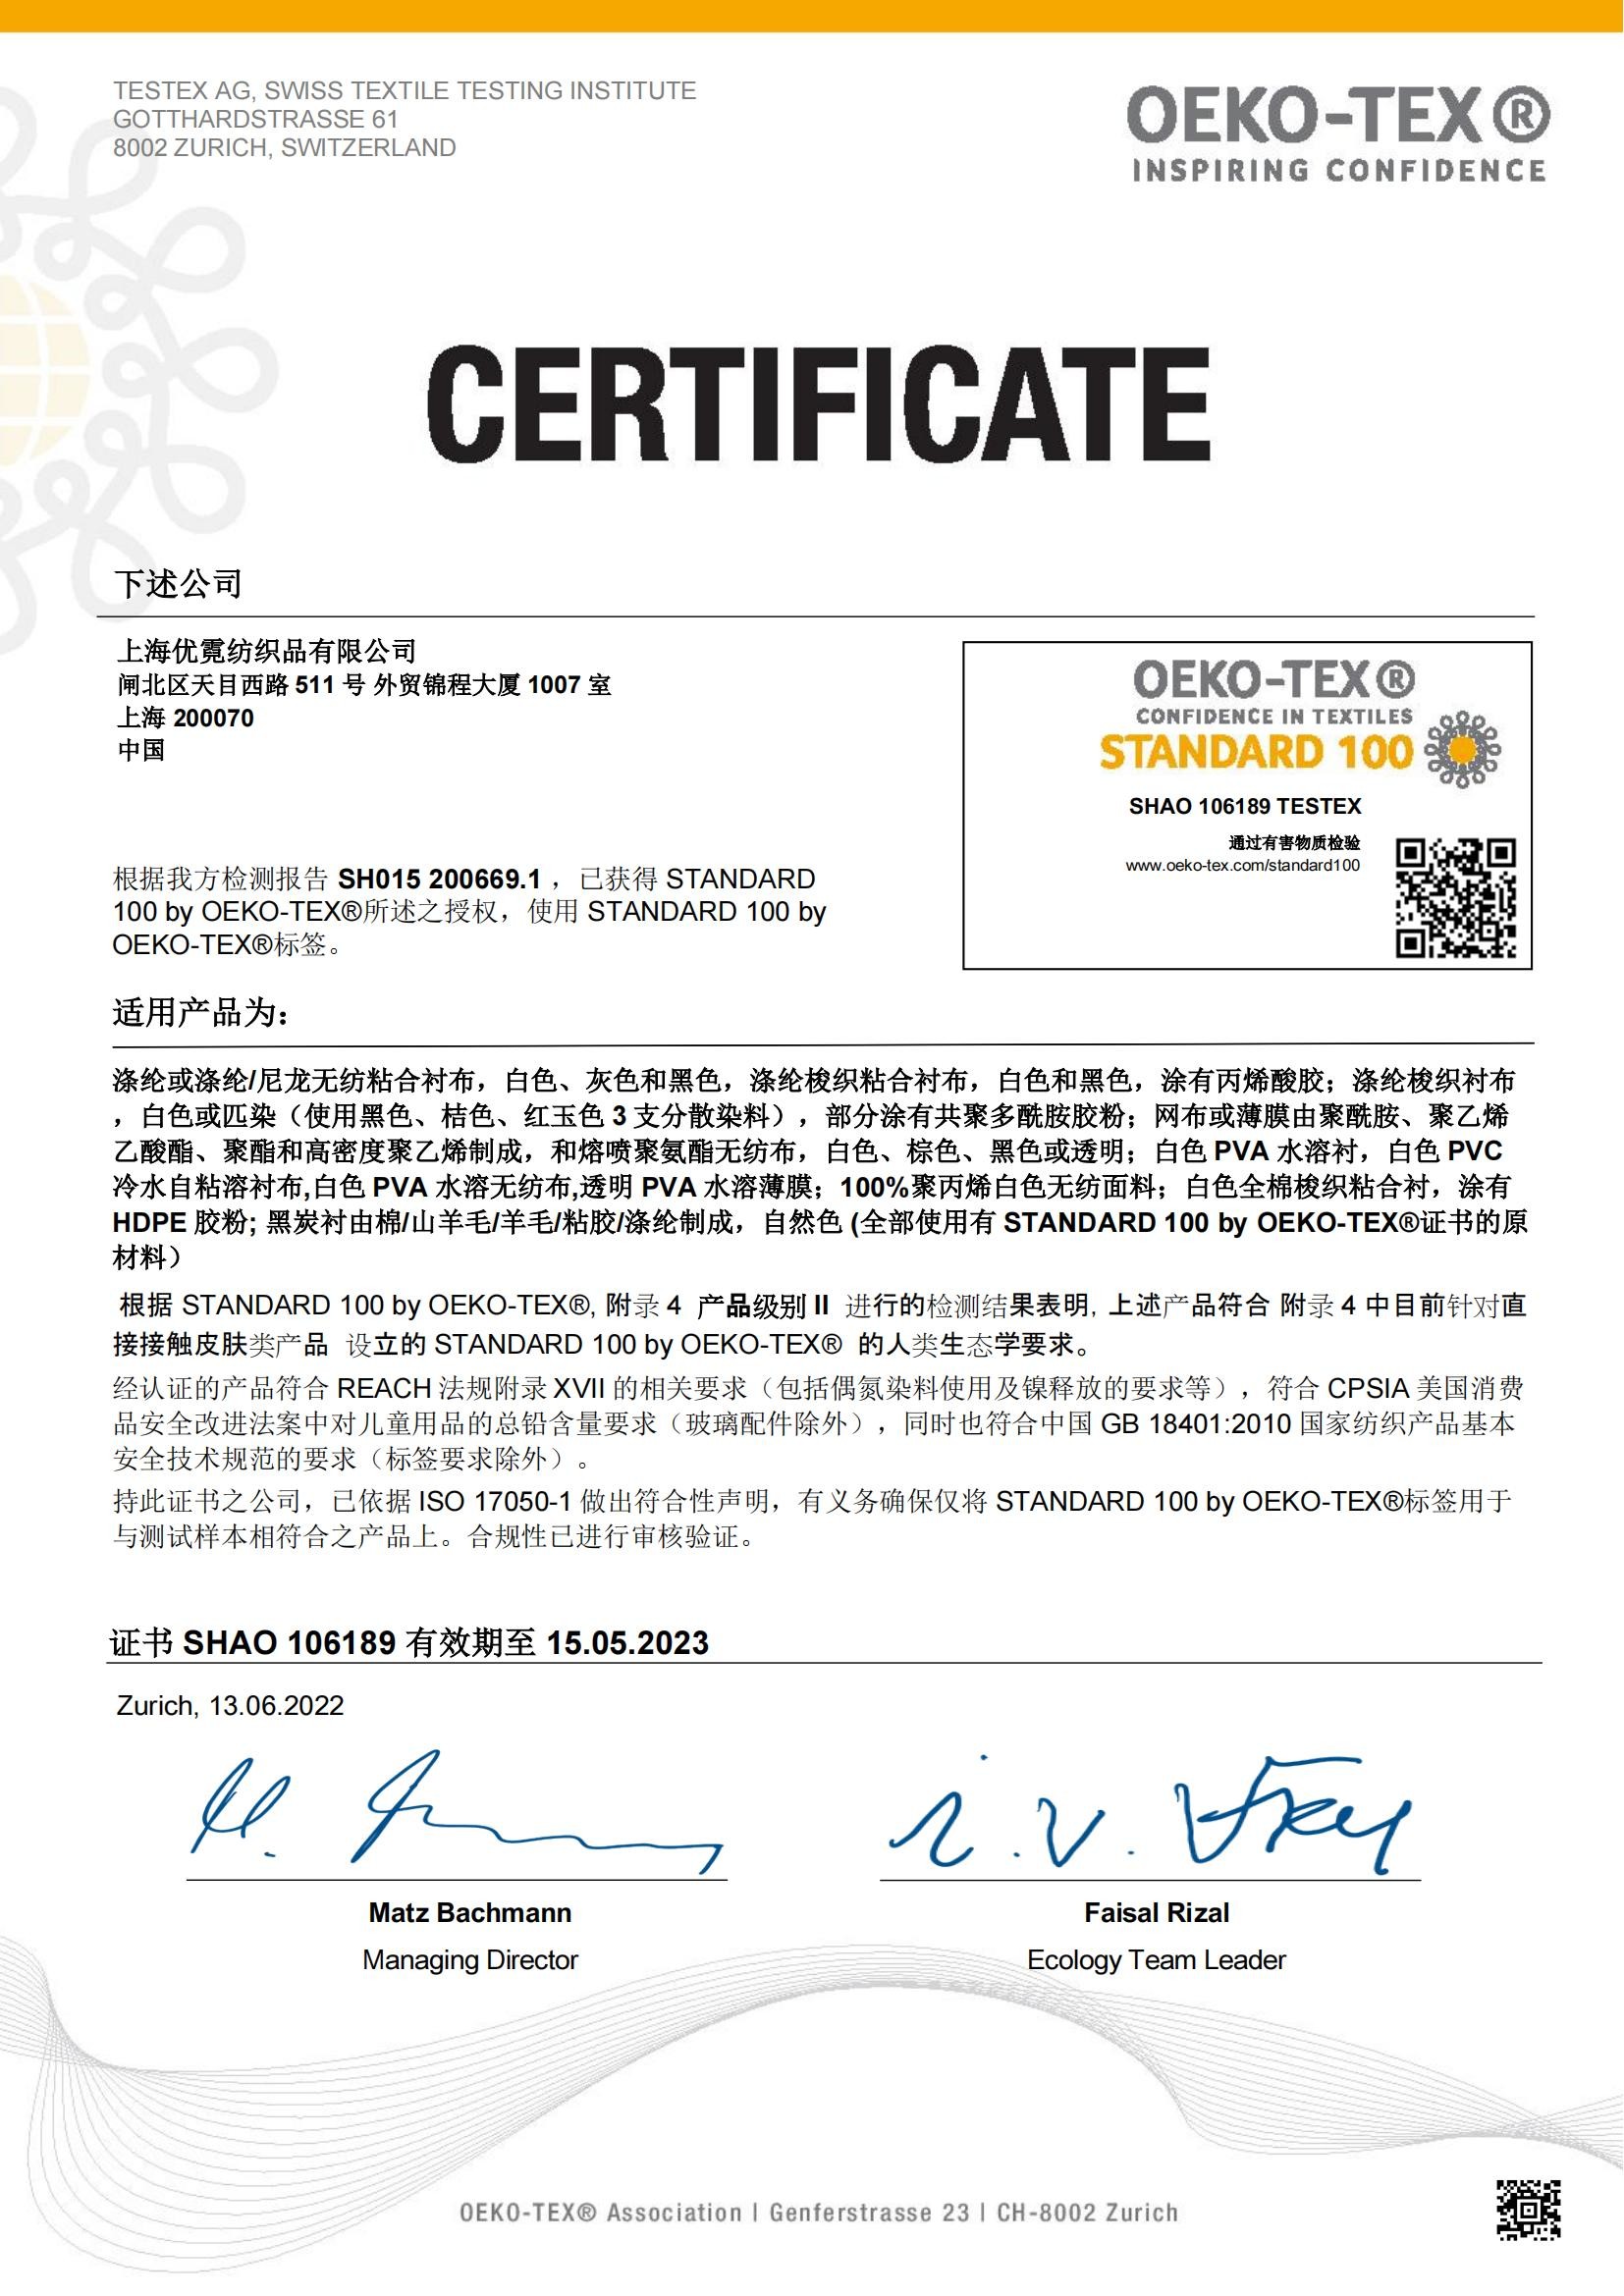 Chiny Shanghai Uneed Textile Co.,Ltd Certyfikaty